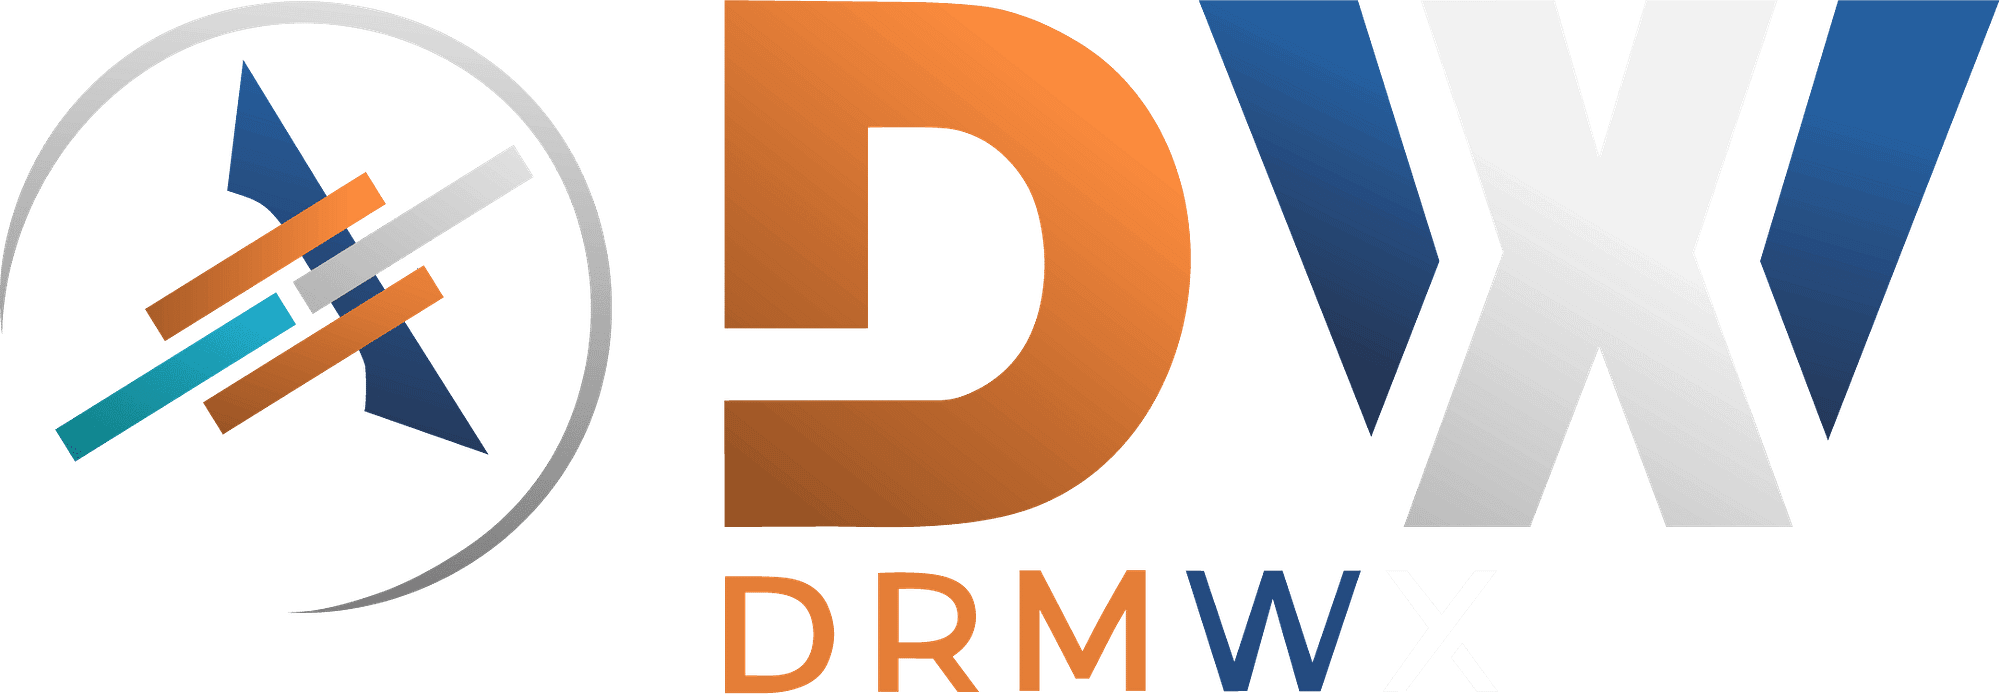 DRMWX Creative Agency